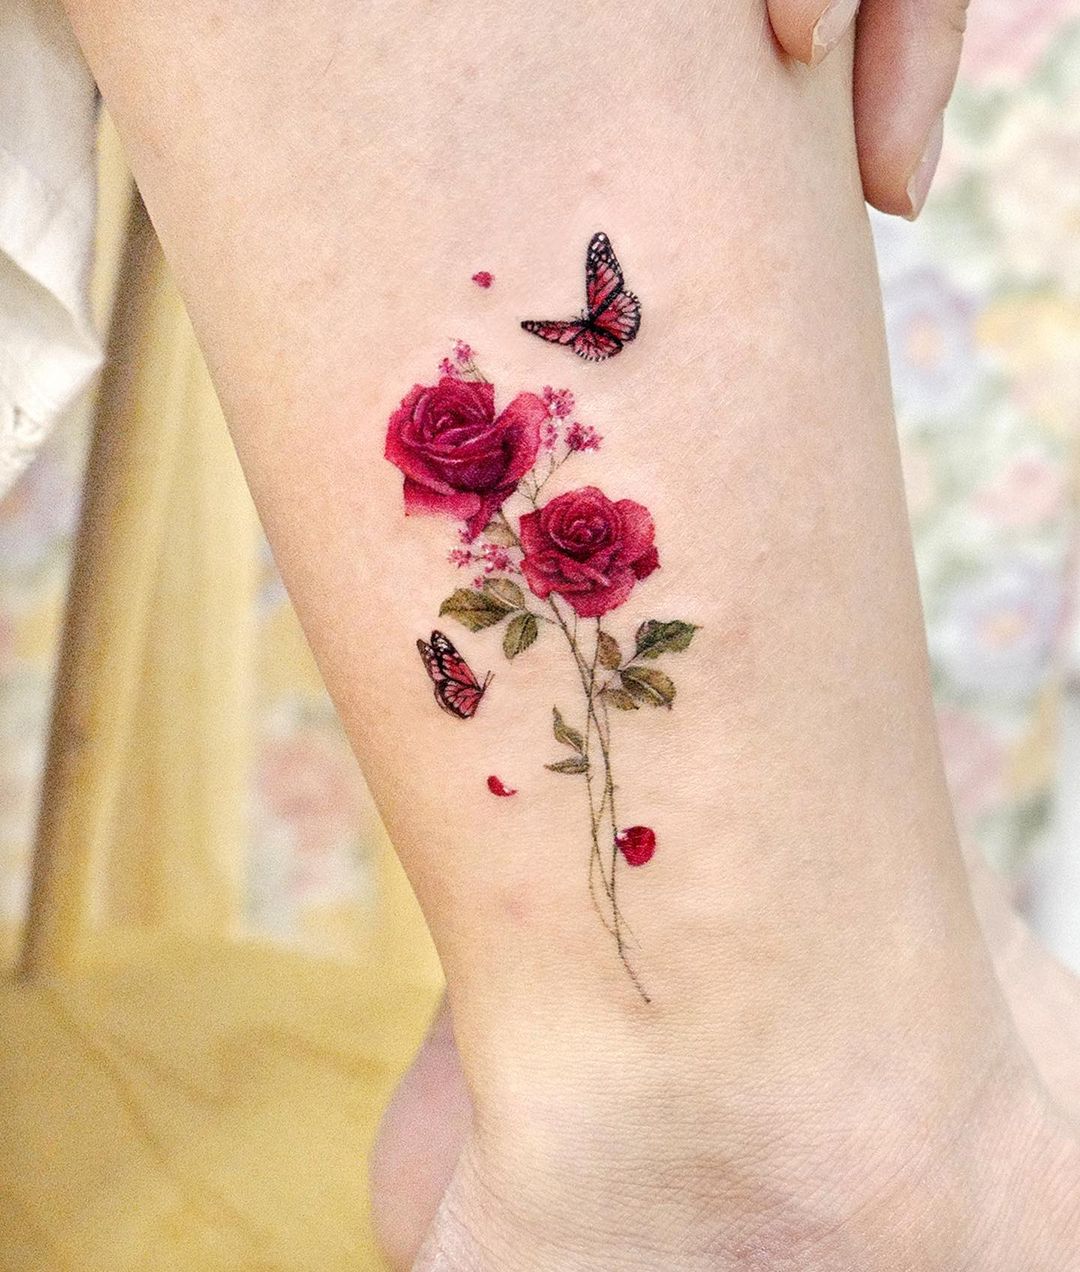 Colored rose tattoo designs